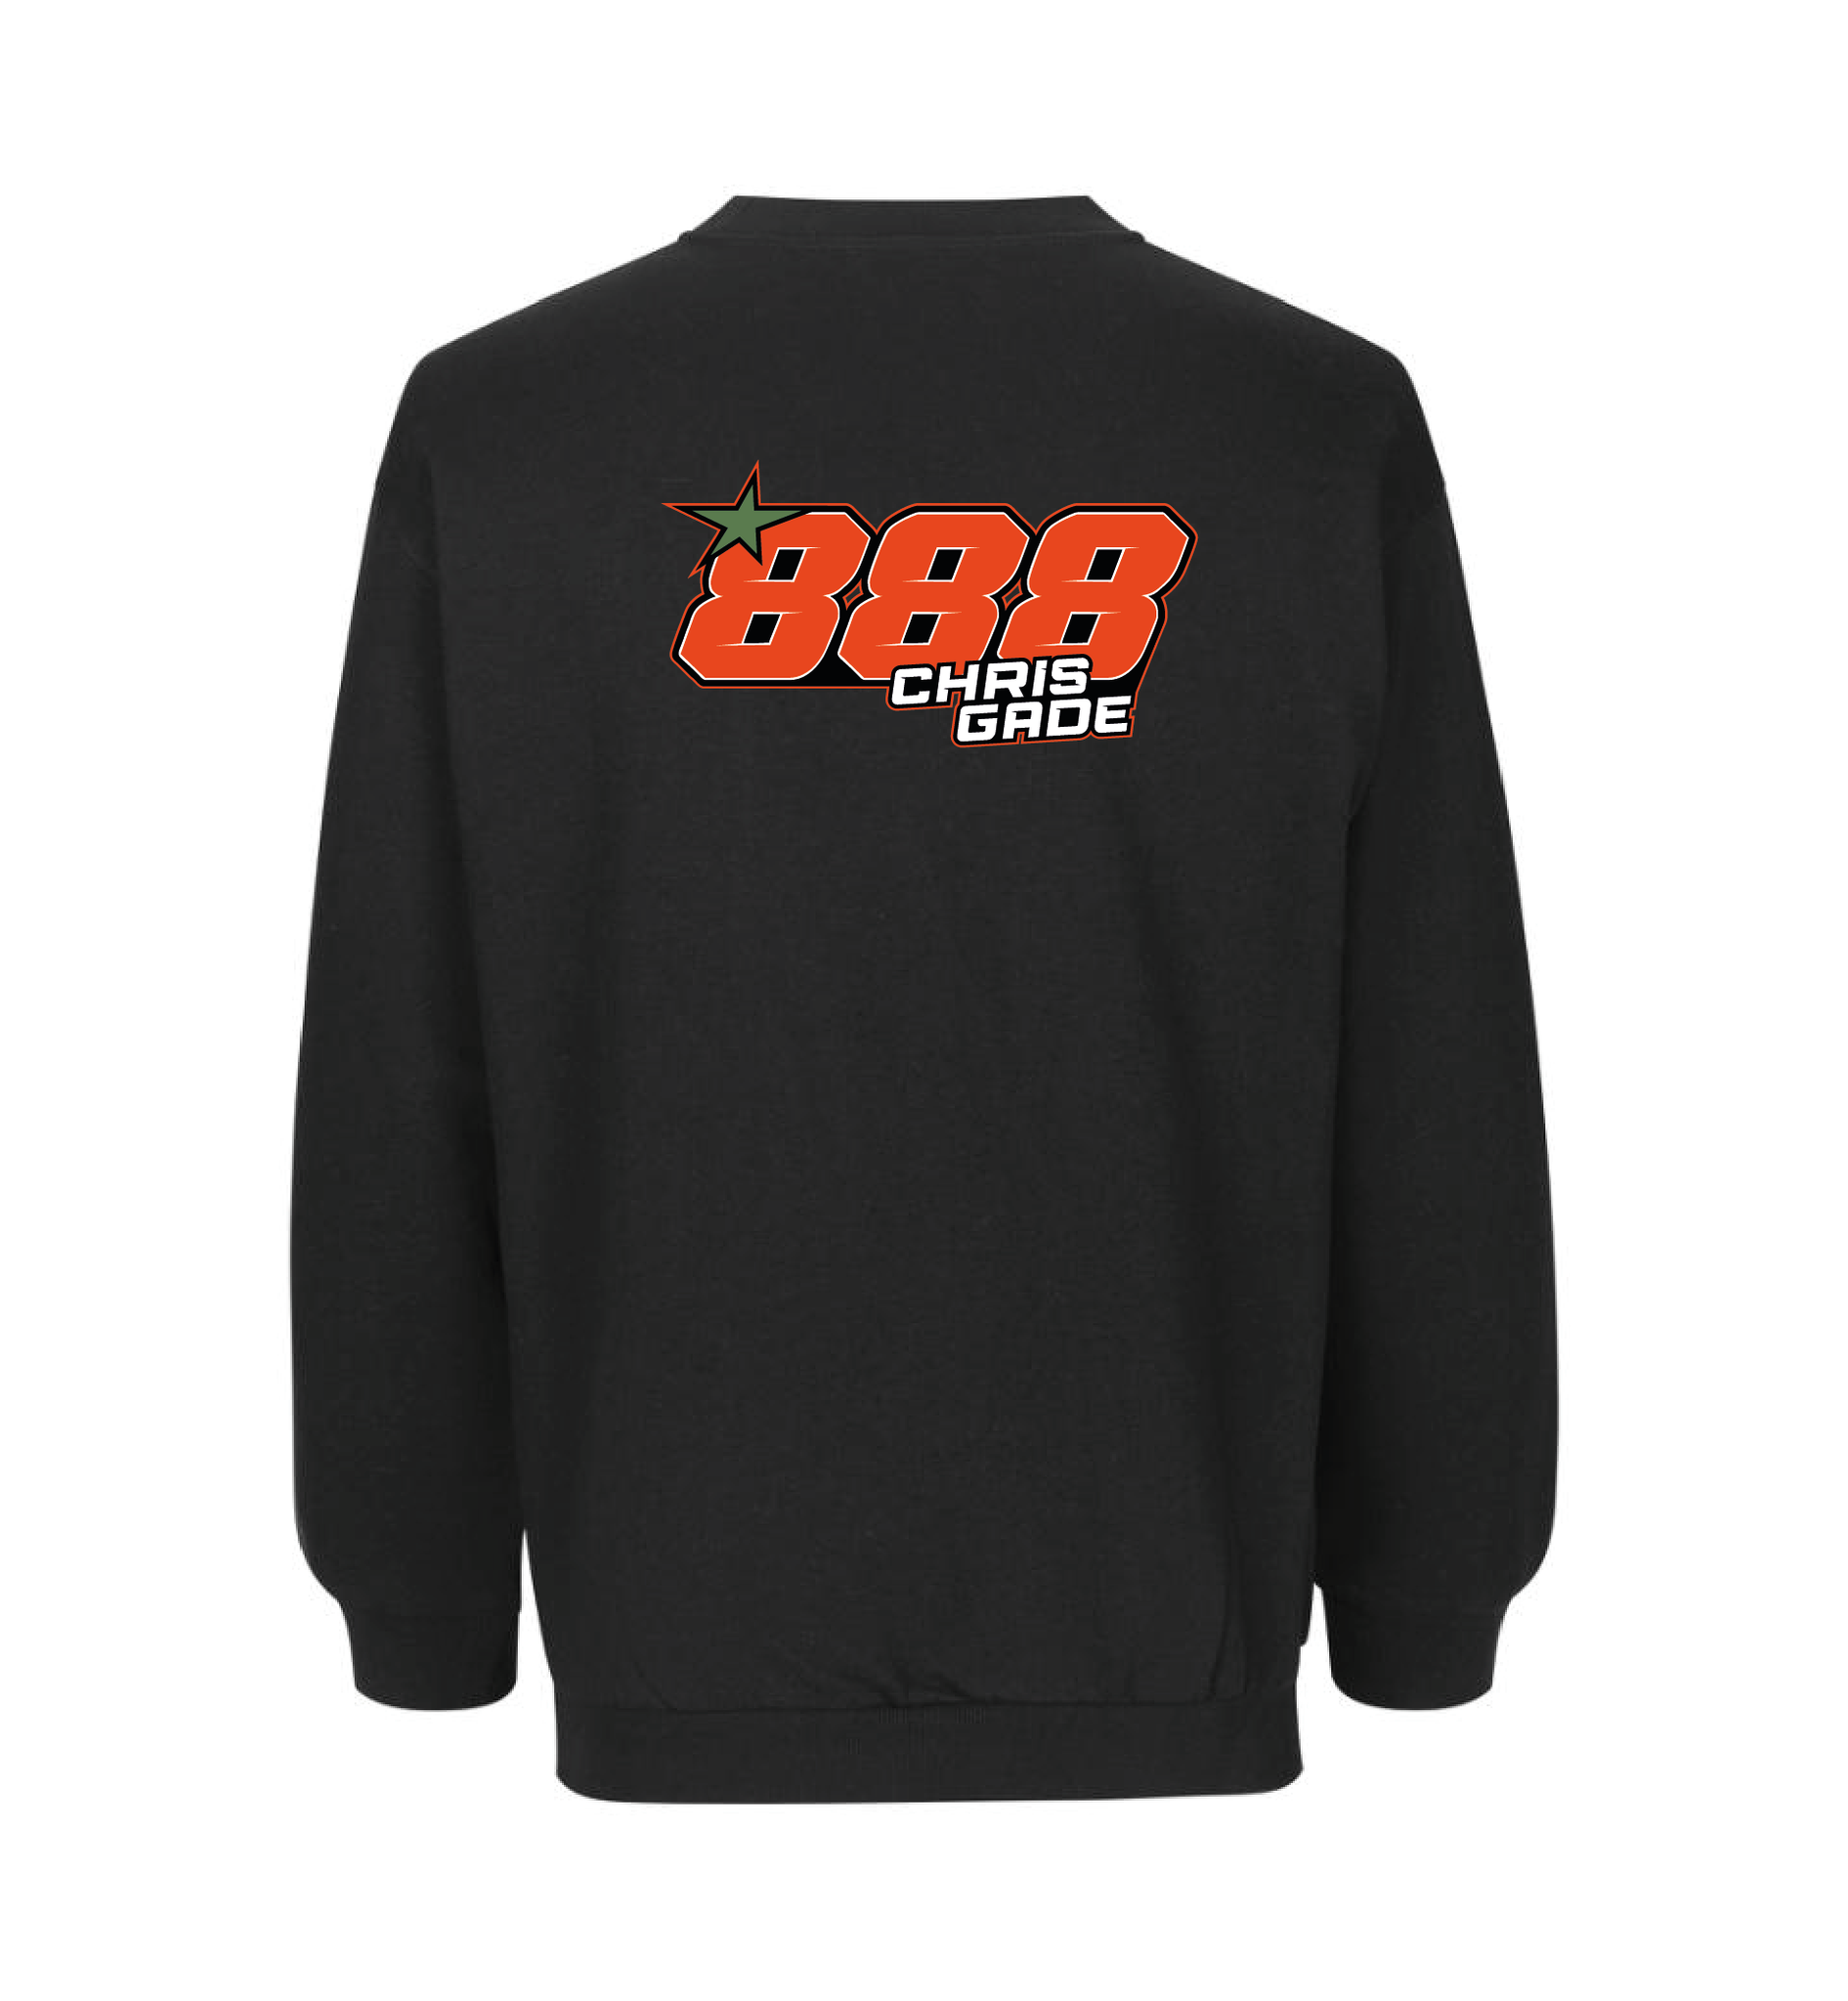 Chris Gade #888 Sweatshirt